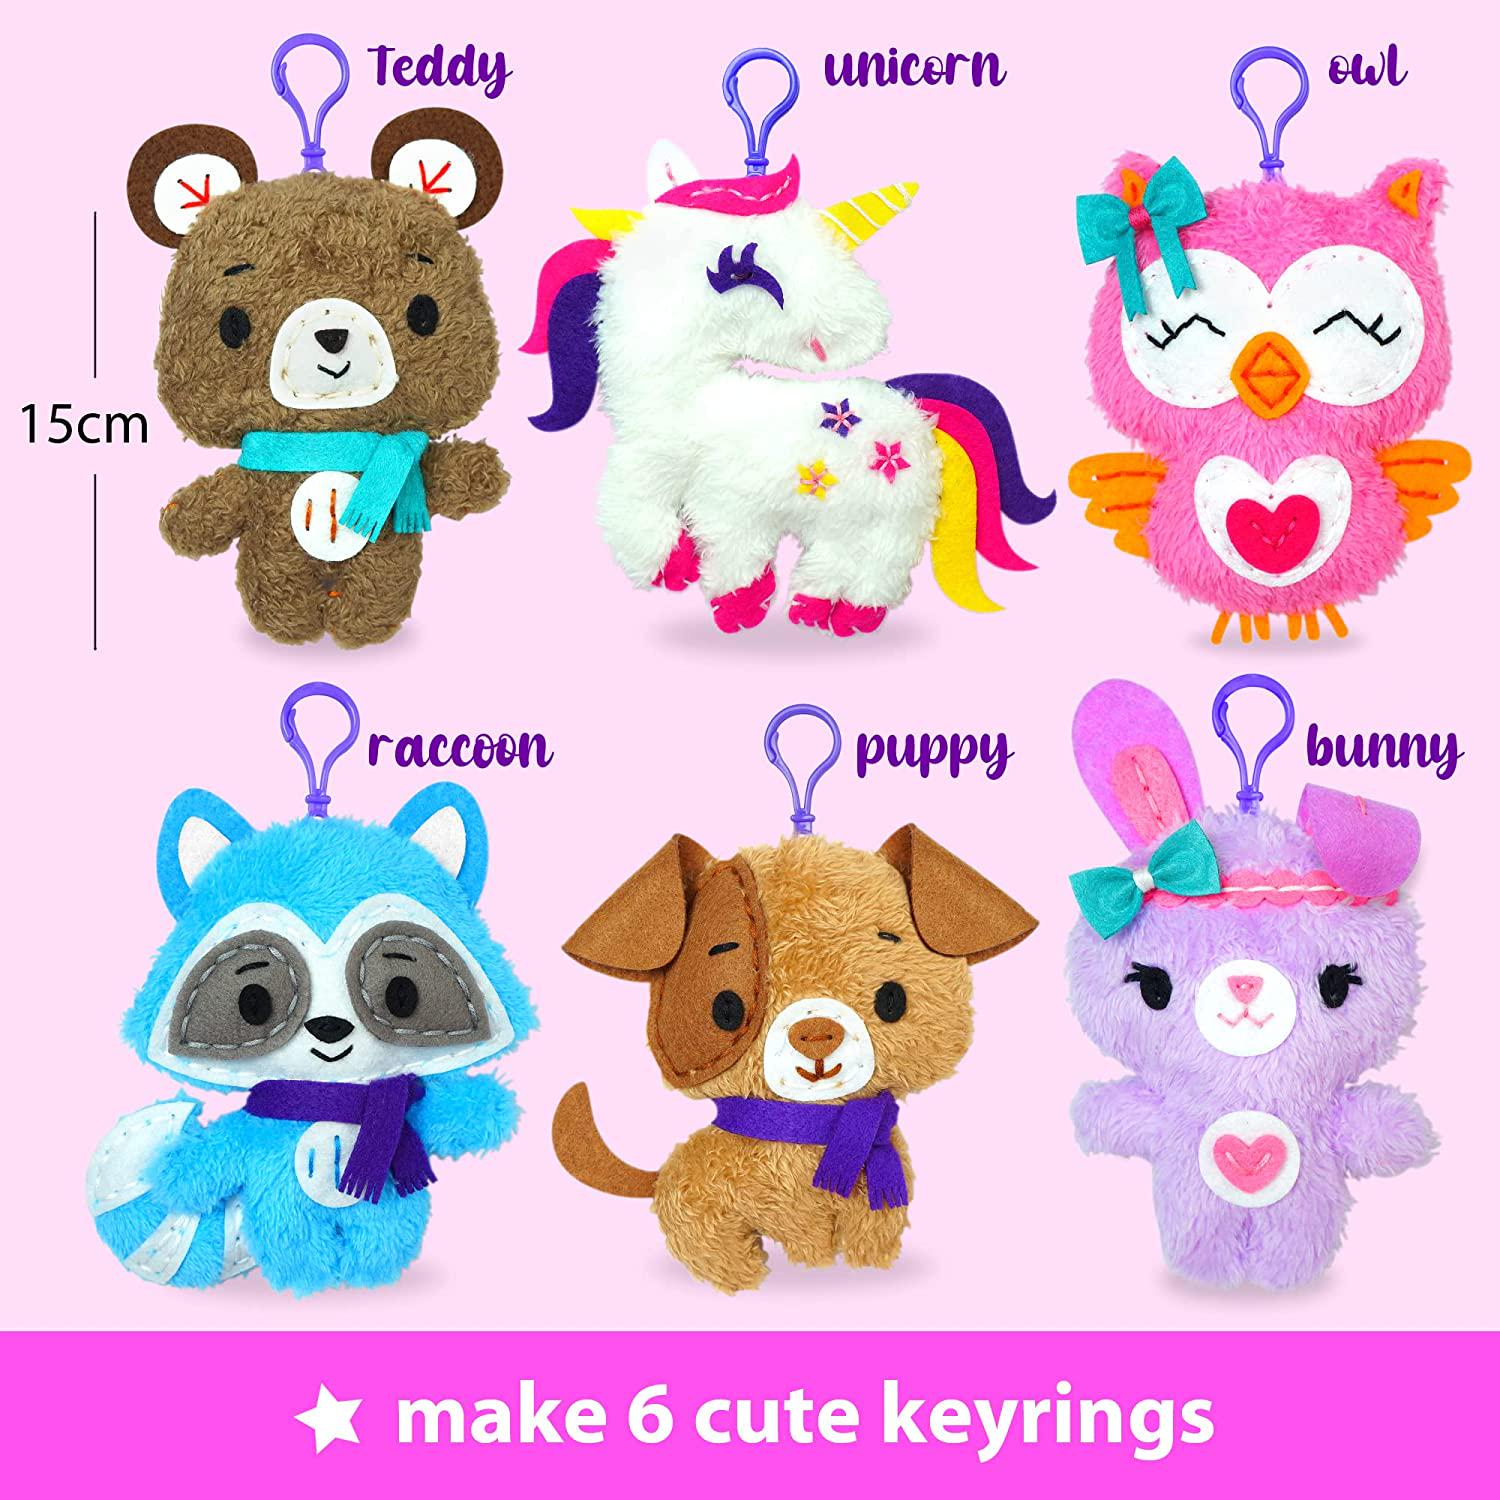 KRAFUN, KRAFUN Unicorn Sewing Keyring Kit for Kids Age 7 8 9 10 11 12 Learn Art and Craft, Includes 6 Stuffed Animal Bear, Dog, Rabbit, Raccoon, Owl Dolls, Instruction and Felt Materials